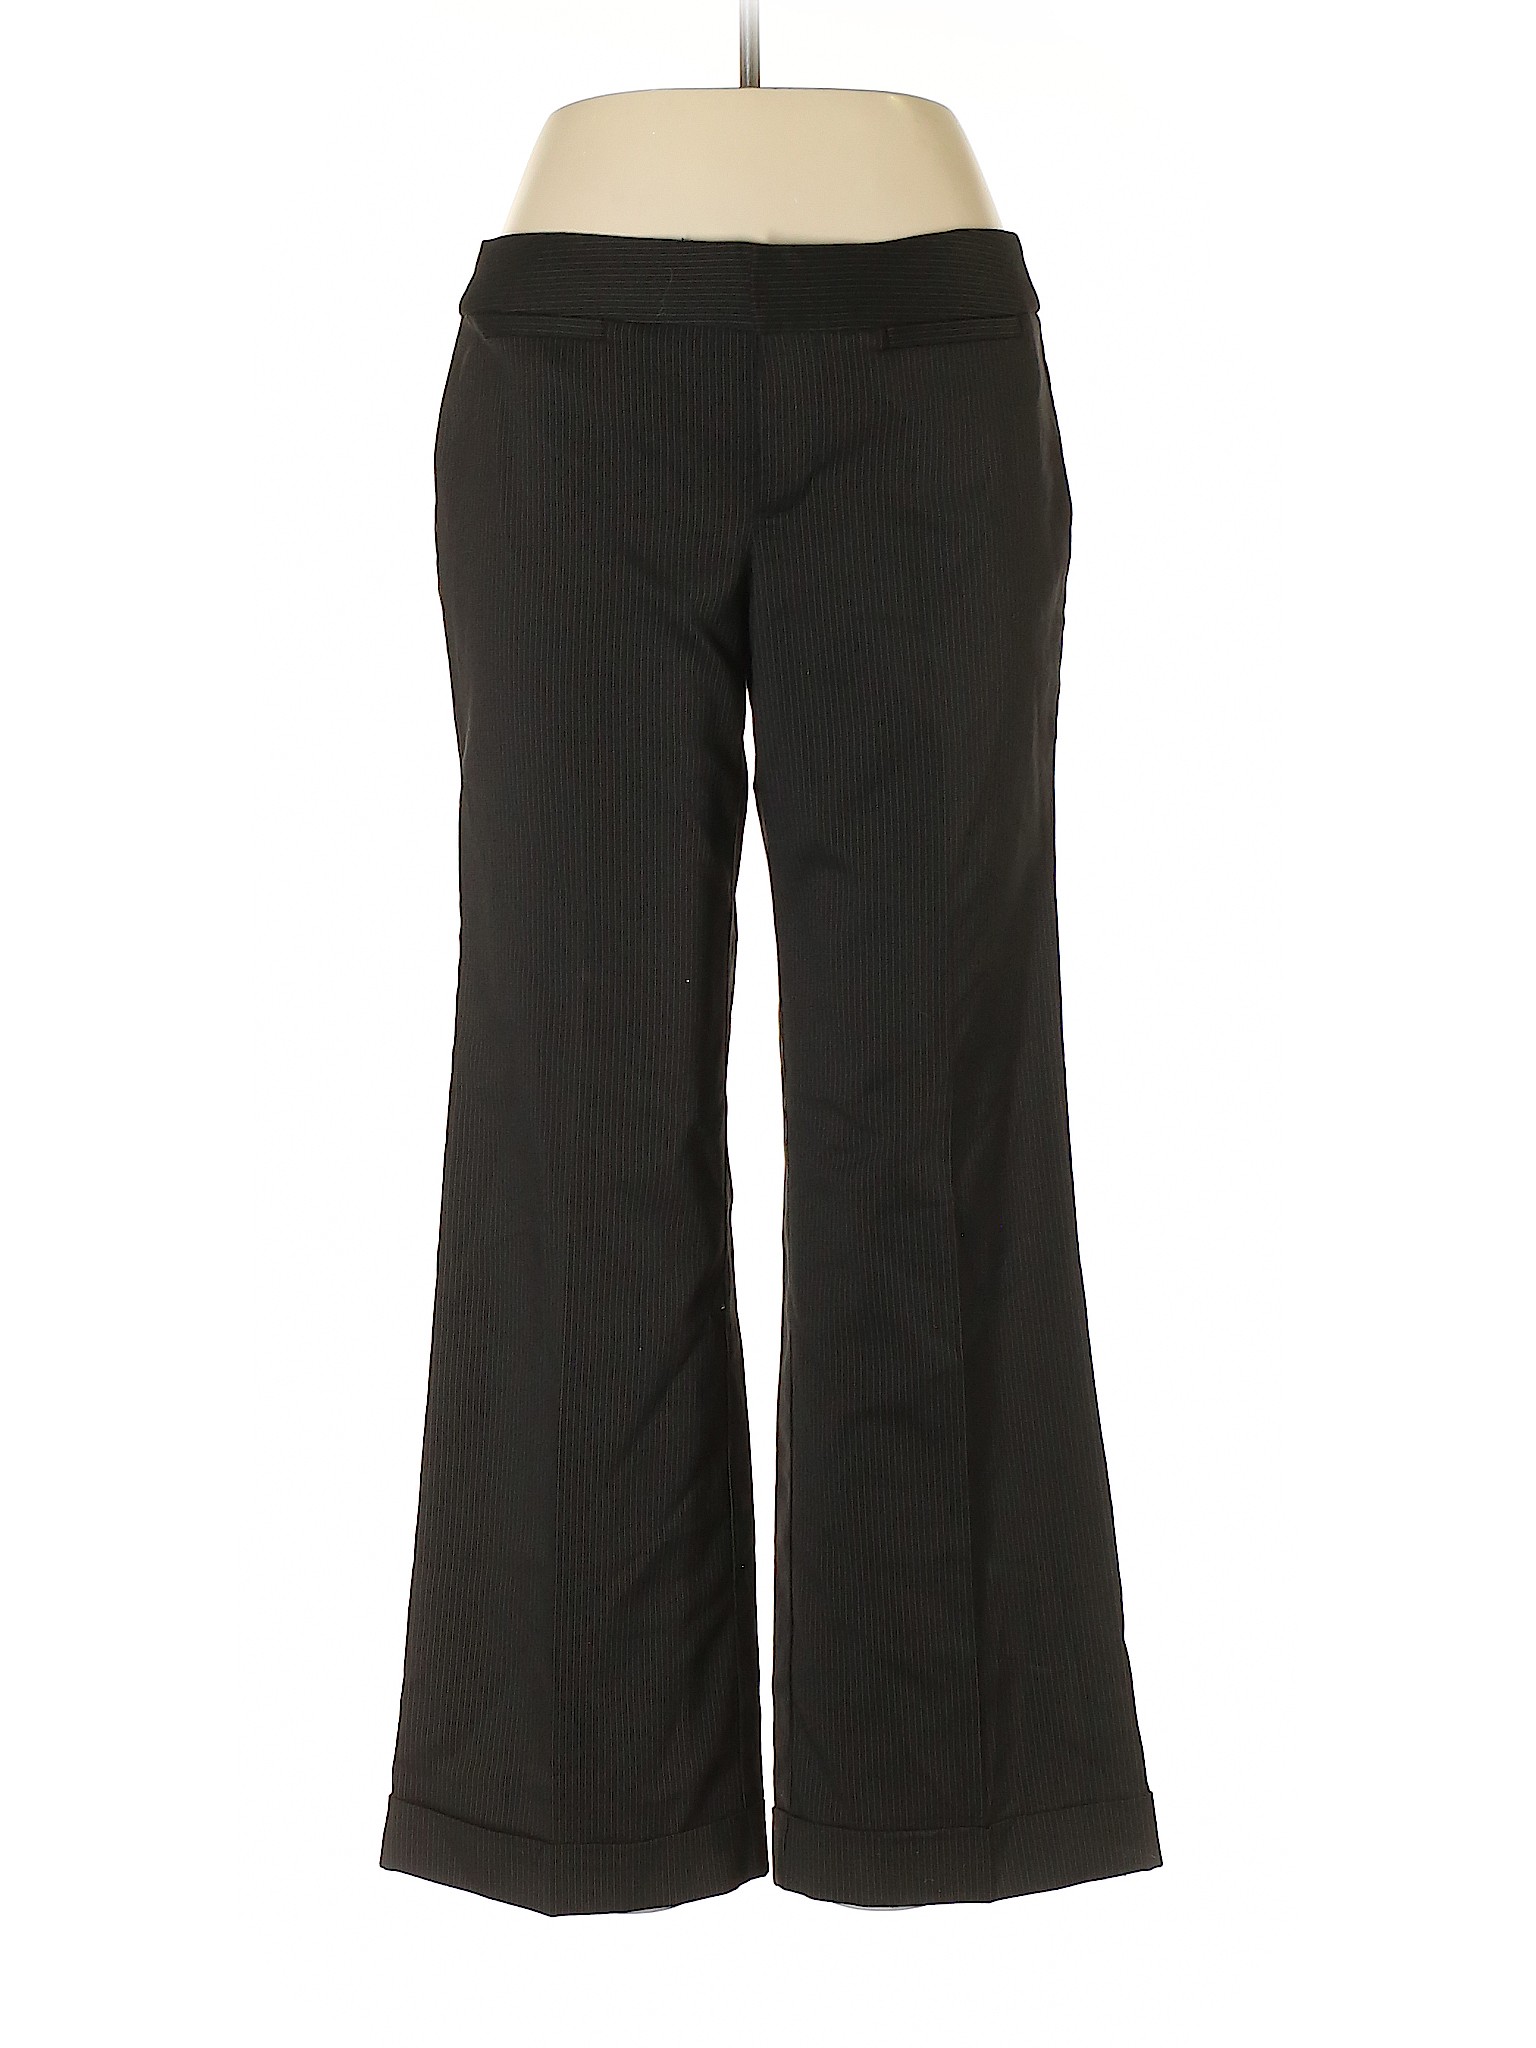 Daisy Fuentes Women Black Dress Pants 10 Petites | eBay